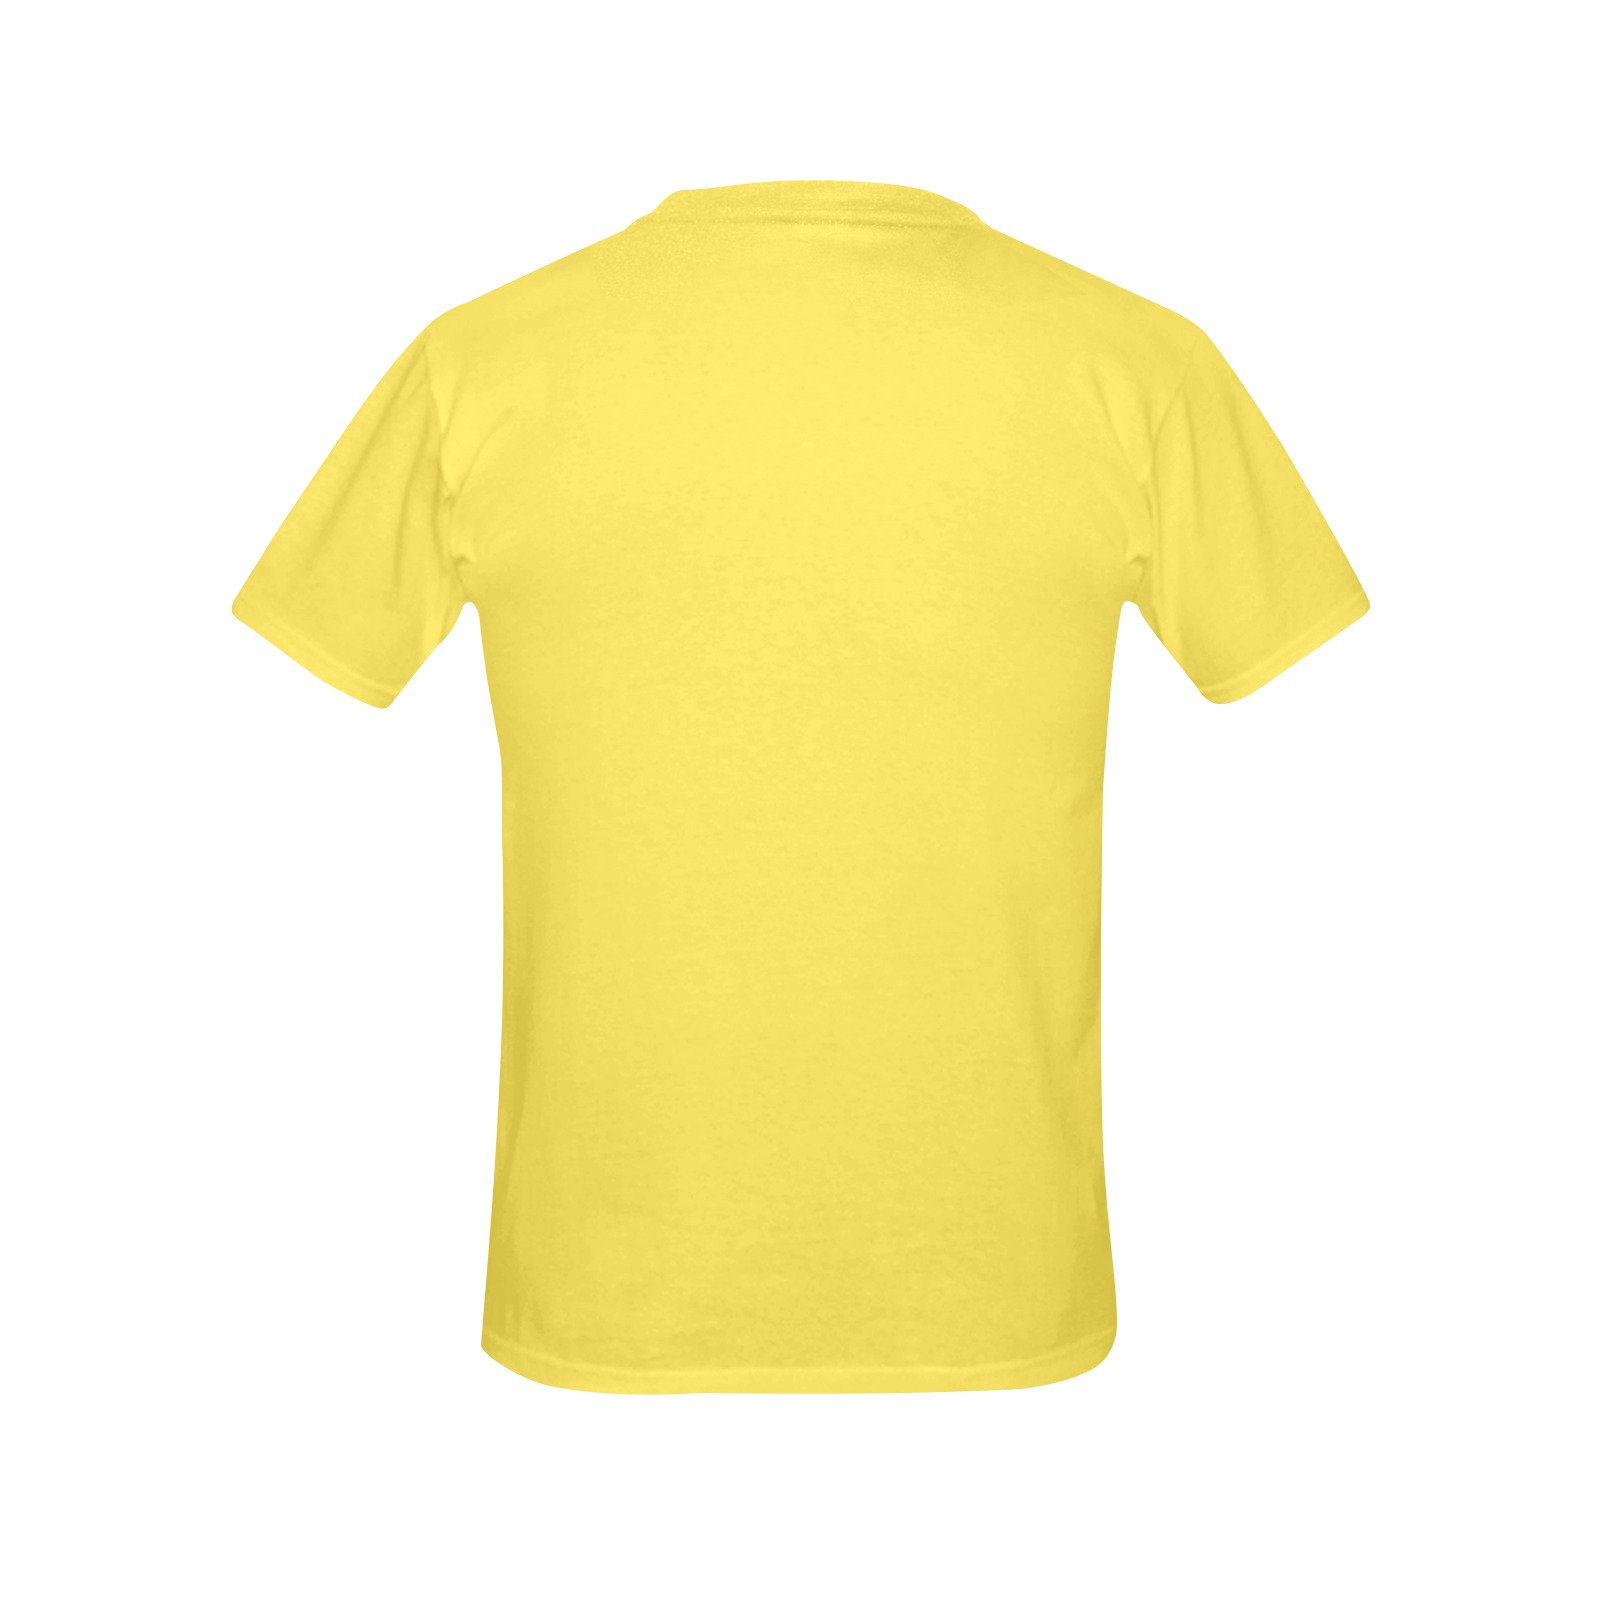 1 - Yahweh Be Praised Yellow T-Shirt Women Women's All Over Print Crew Neck T-Shirt (Model T40-2)